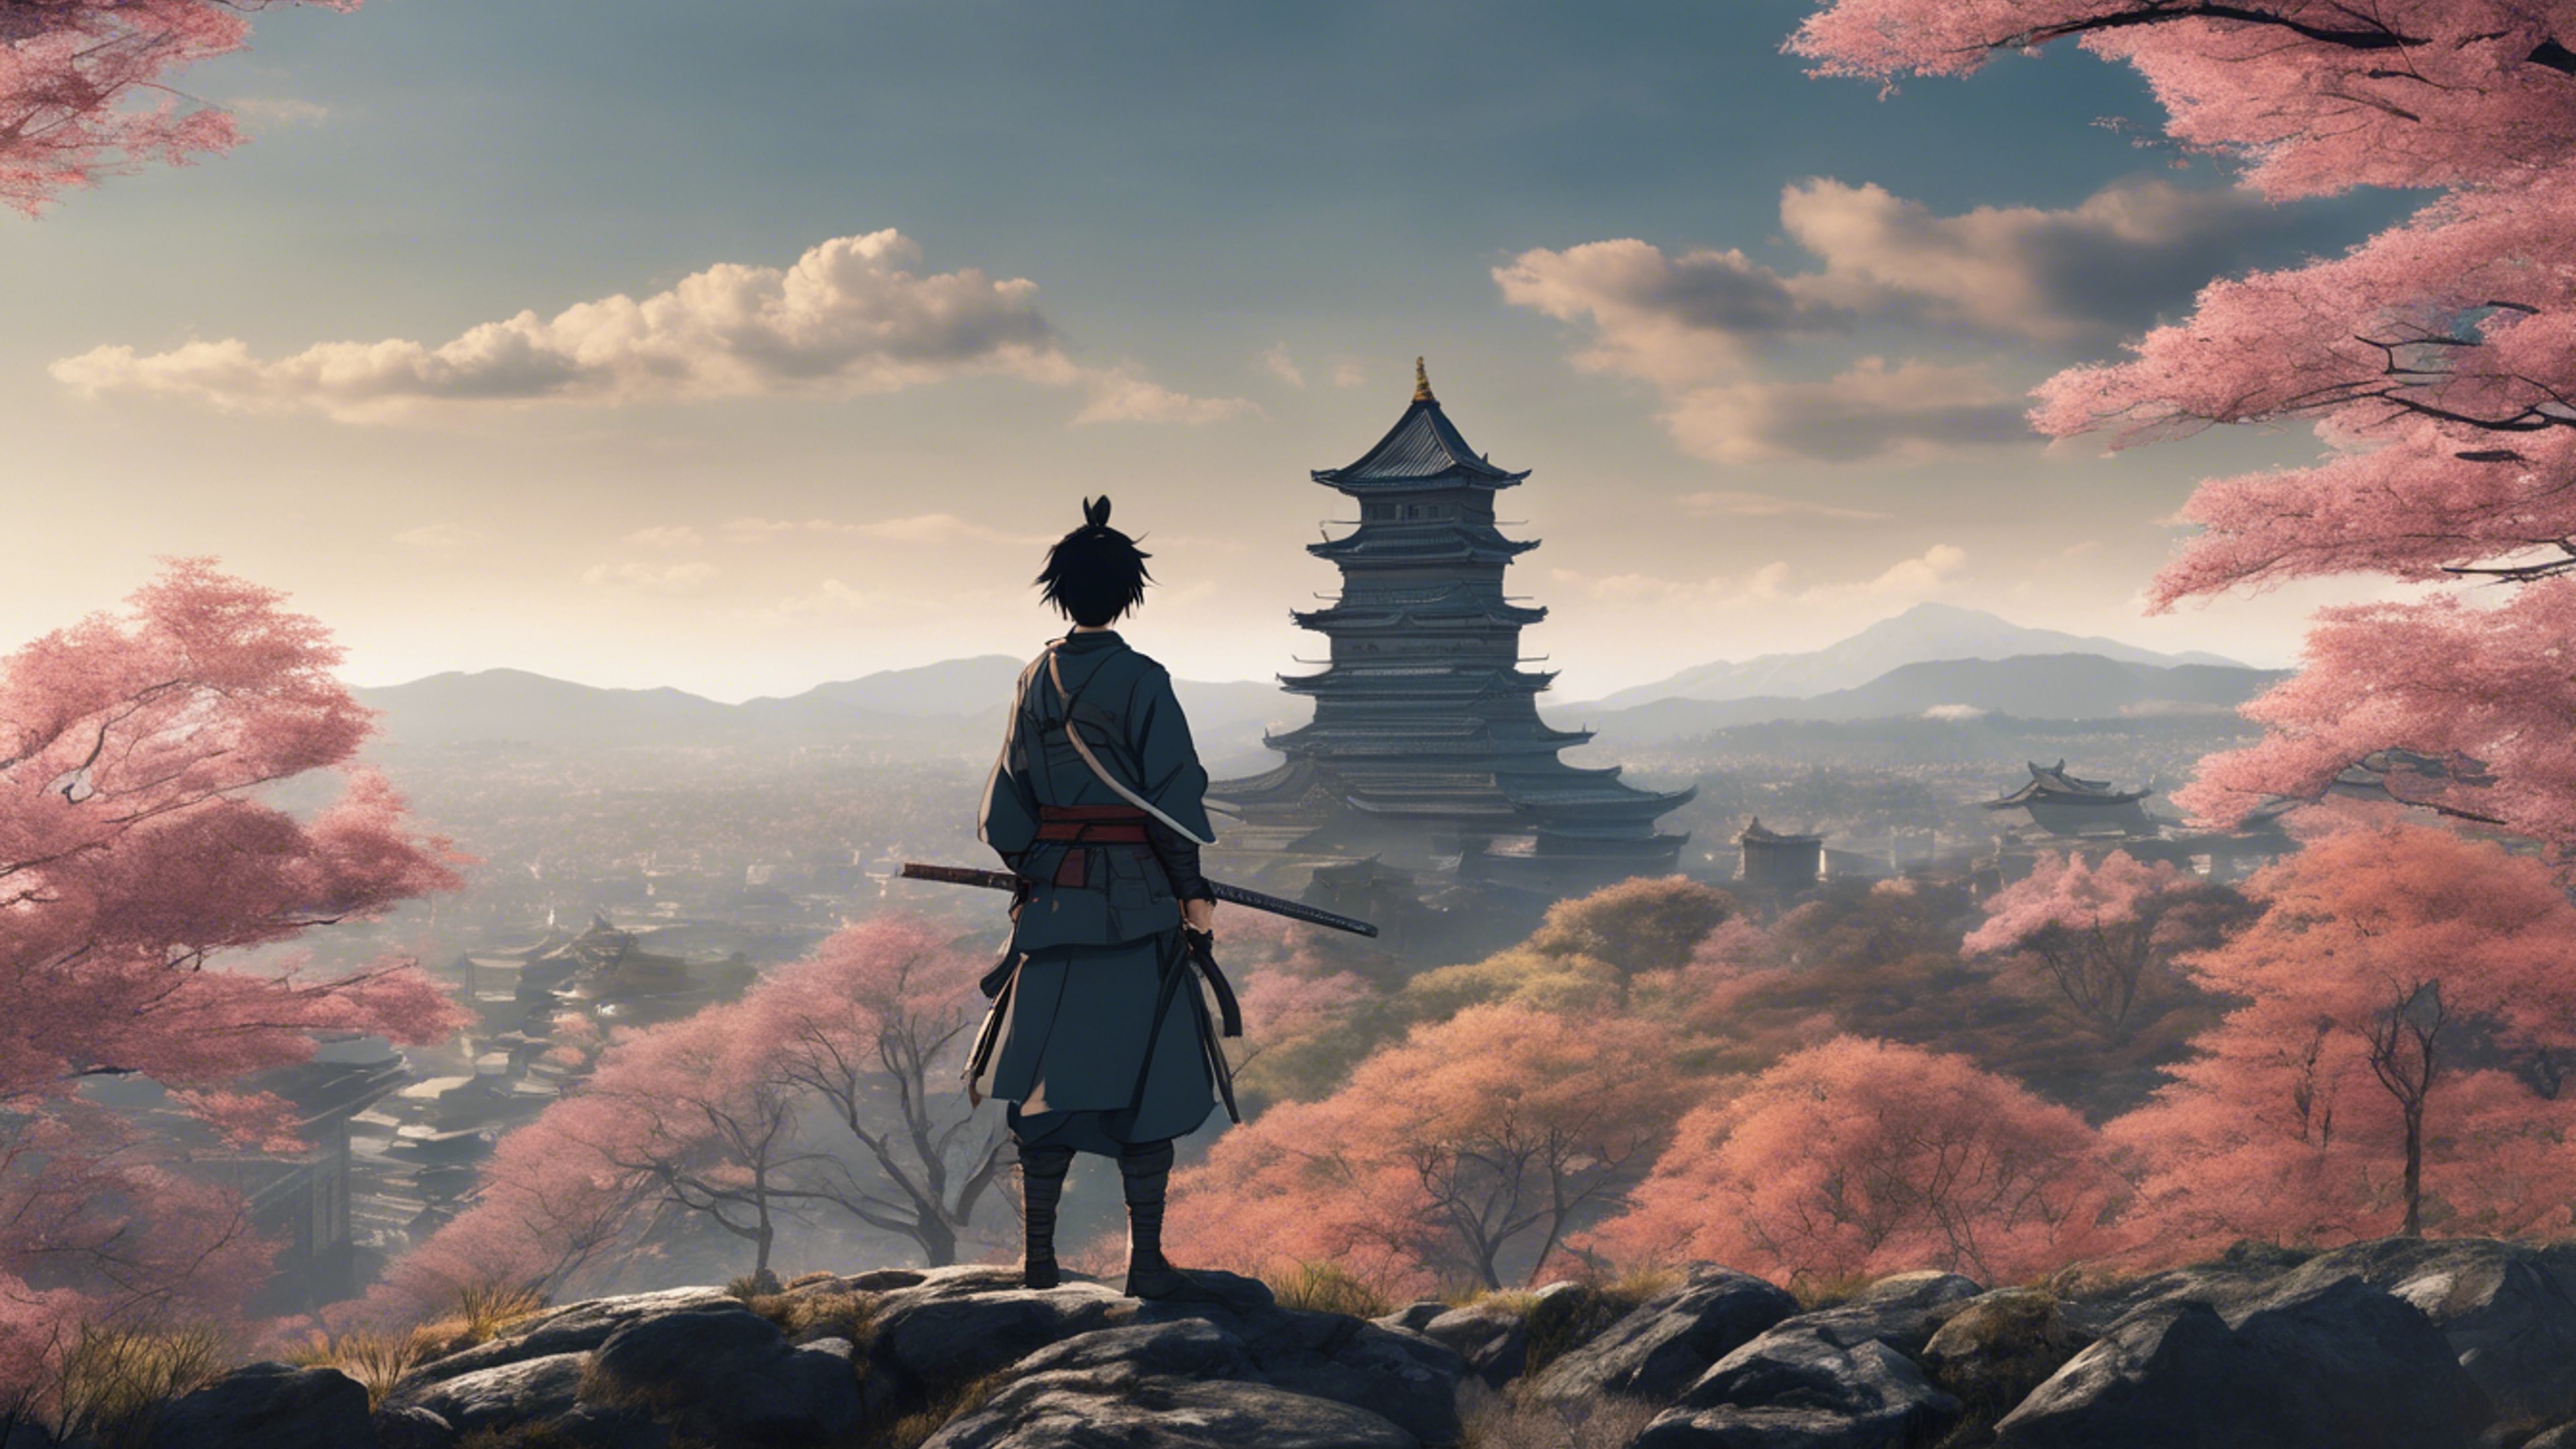 Anime samurai boy standing on a rocky hillside and looking towards a feudal-era Japanese castle. Обои[9402636a9a6e4b8c90bb]